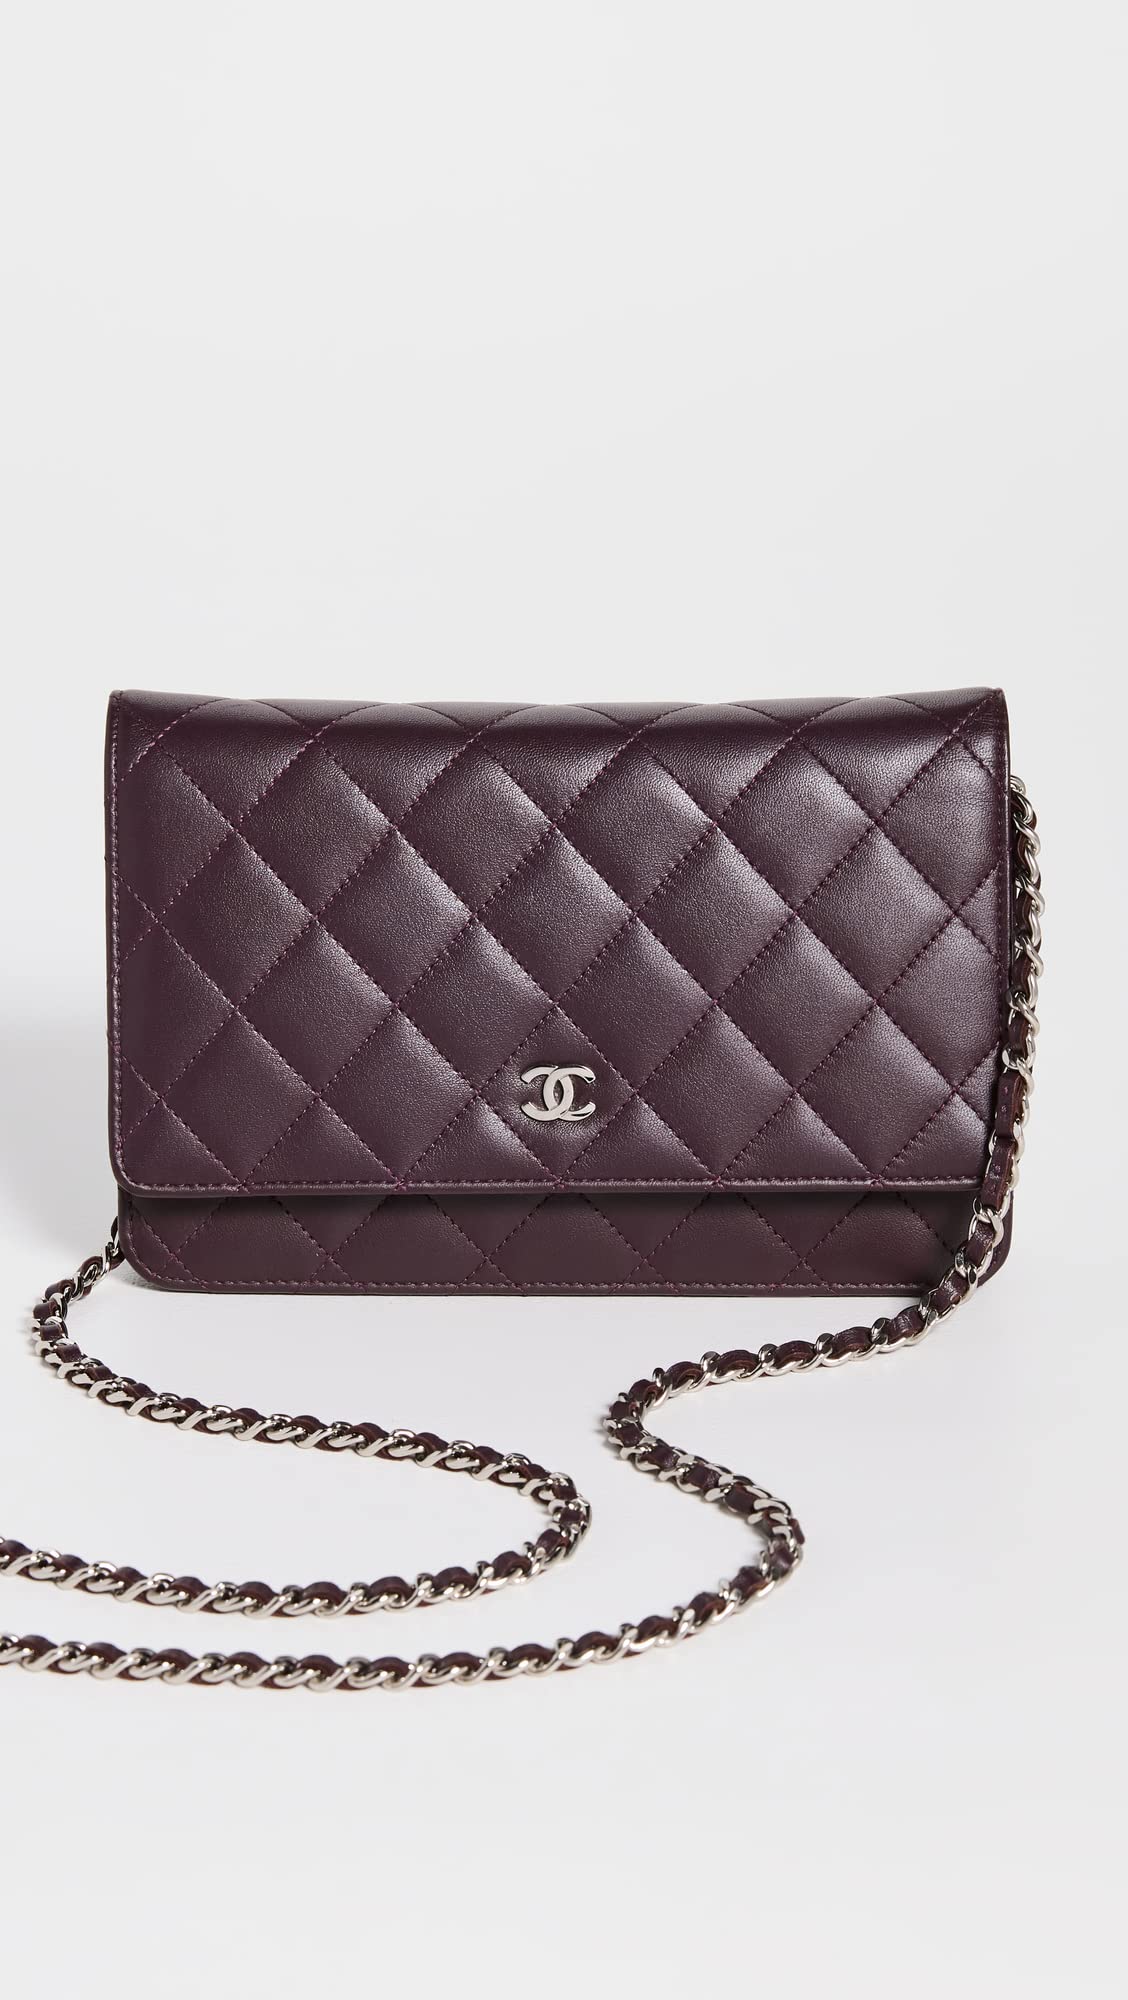 Chanel Classic Wallet On Chain Caviar Purple LGHW